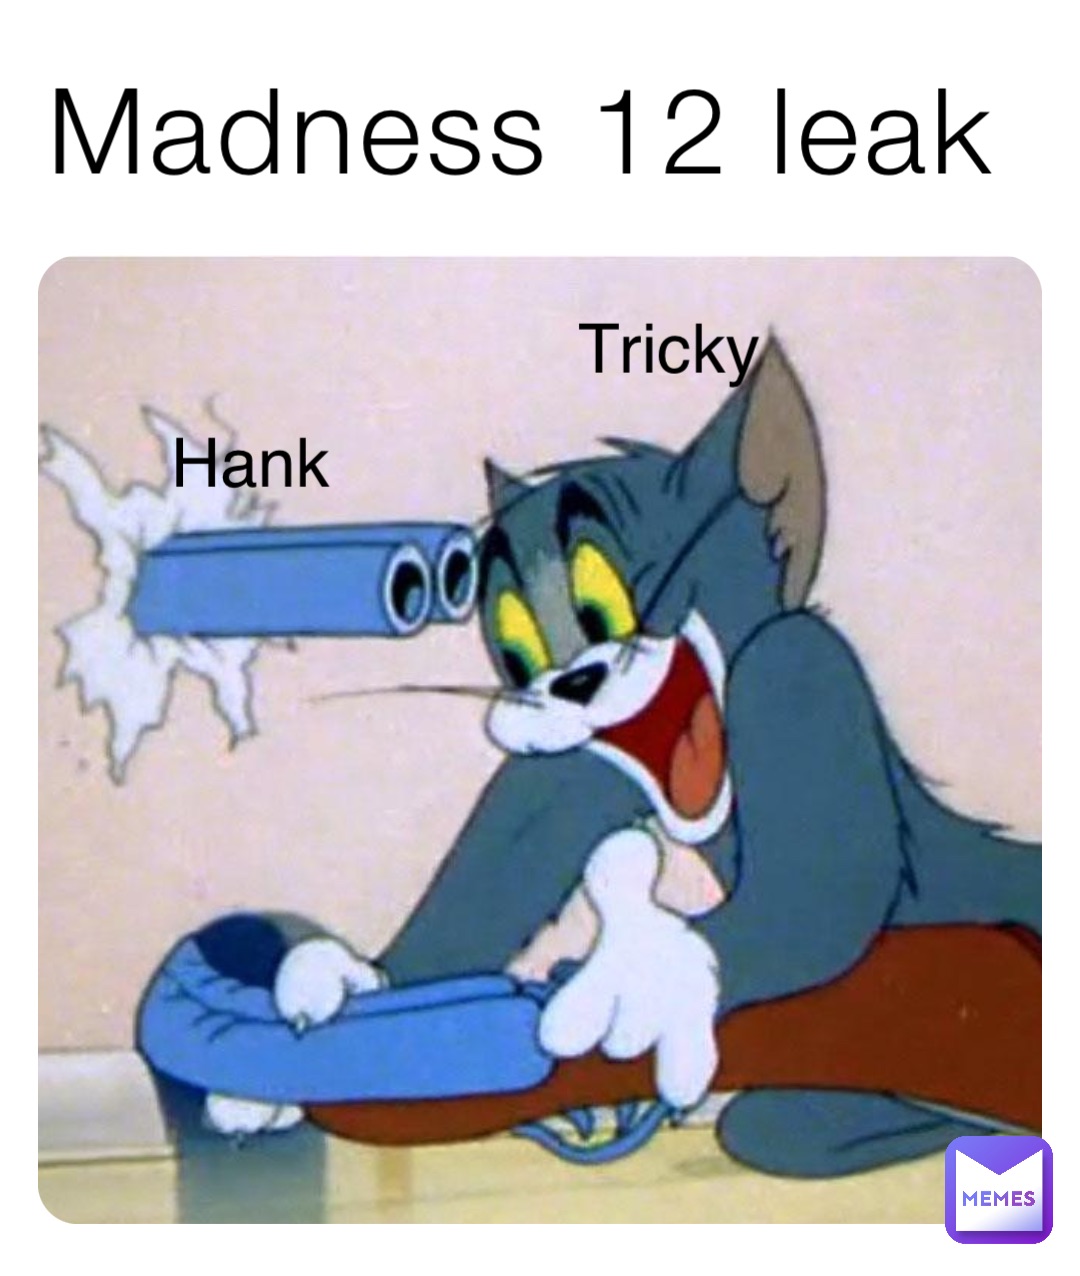 Madness 12 leak Tricky Hank